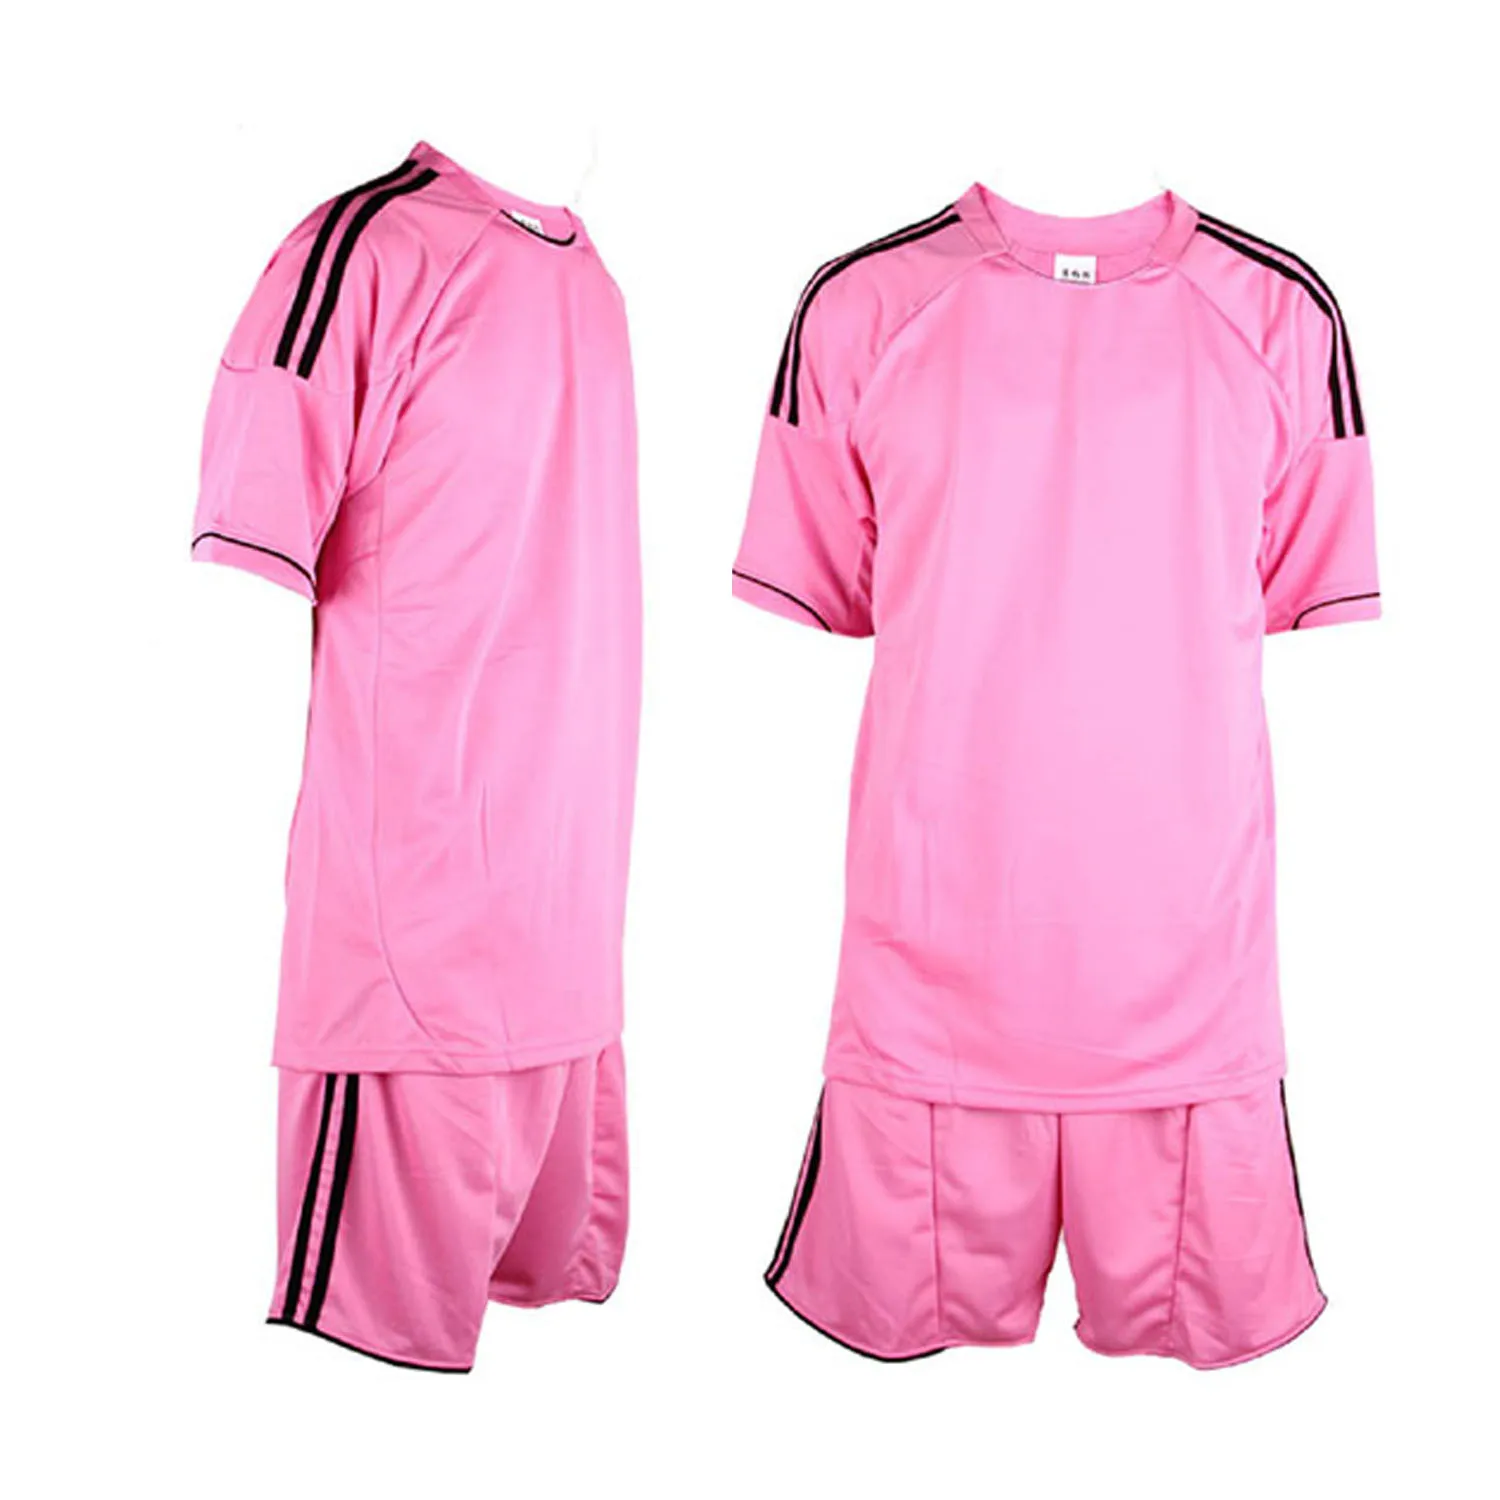 mens pink football jersey